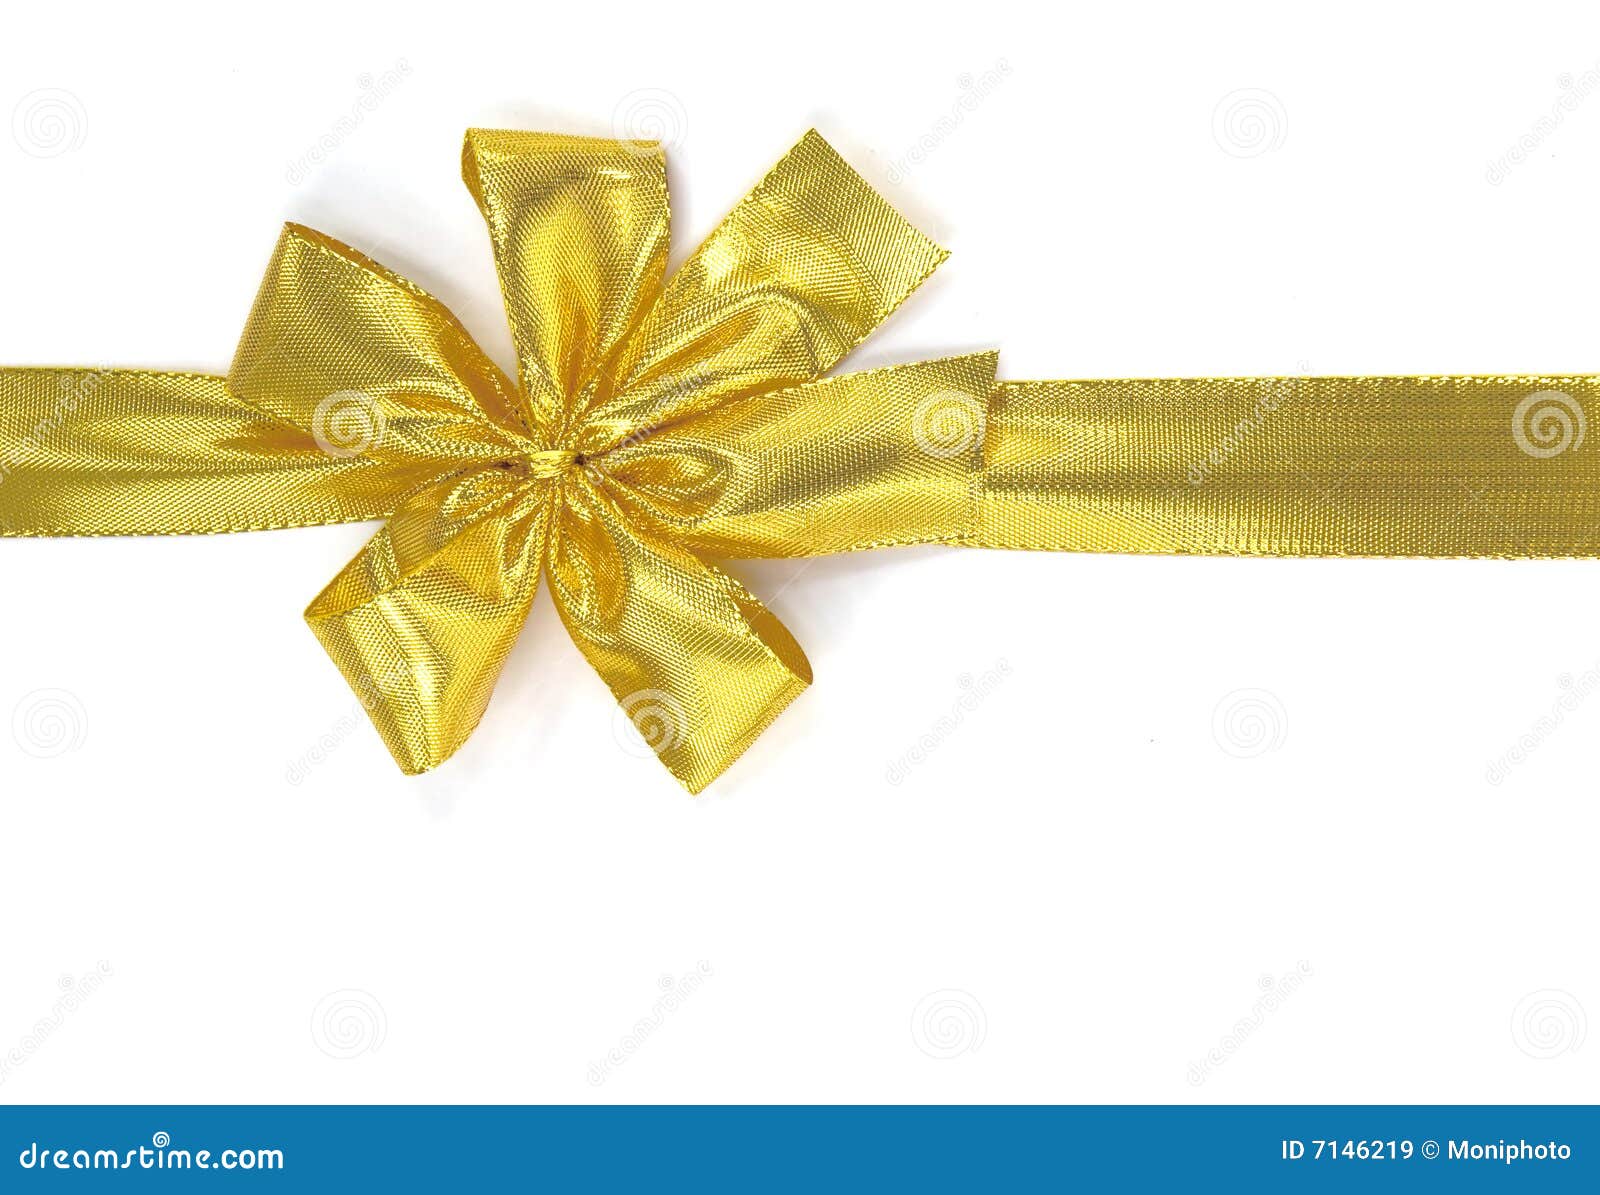 ... Free Stock Images: Golden ribbon - osolated on white background